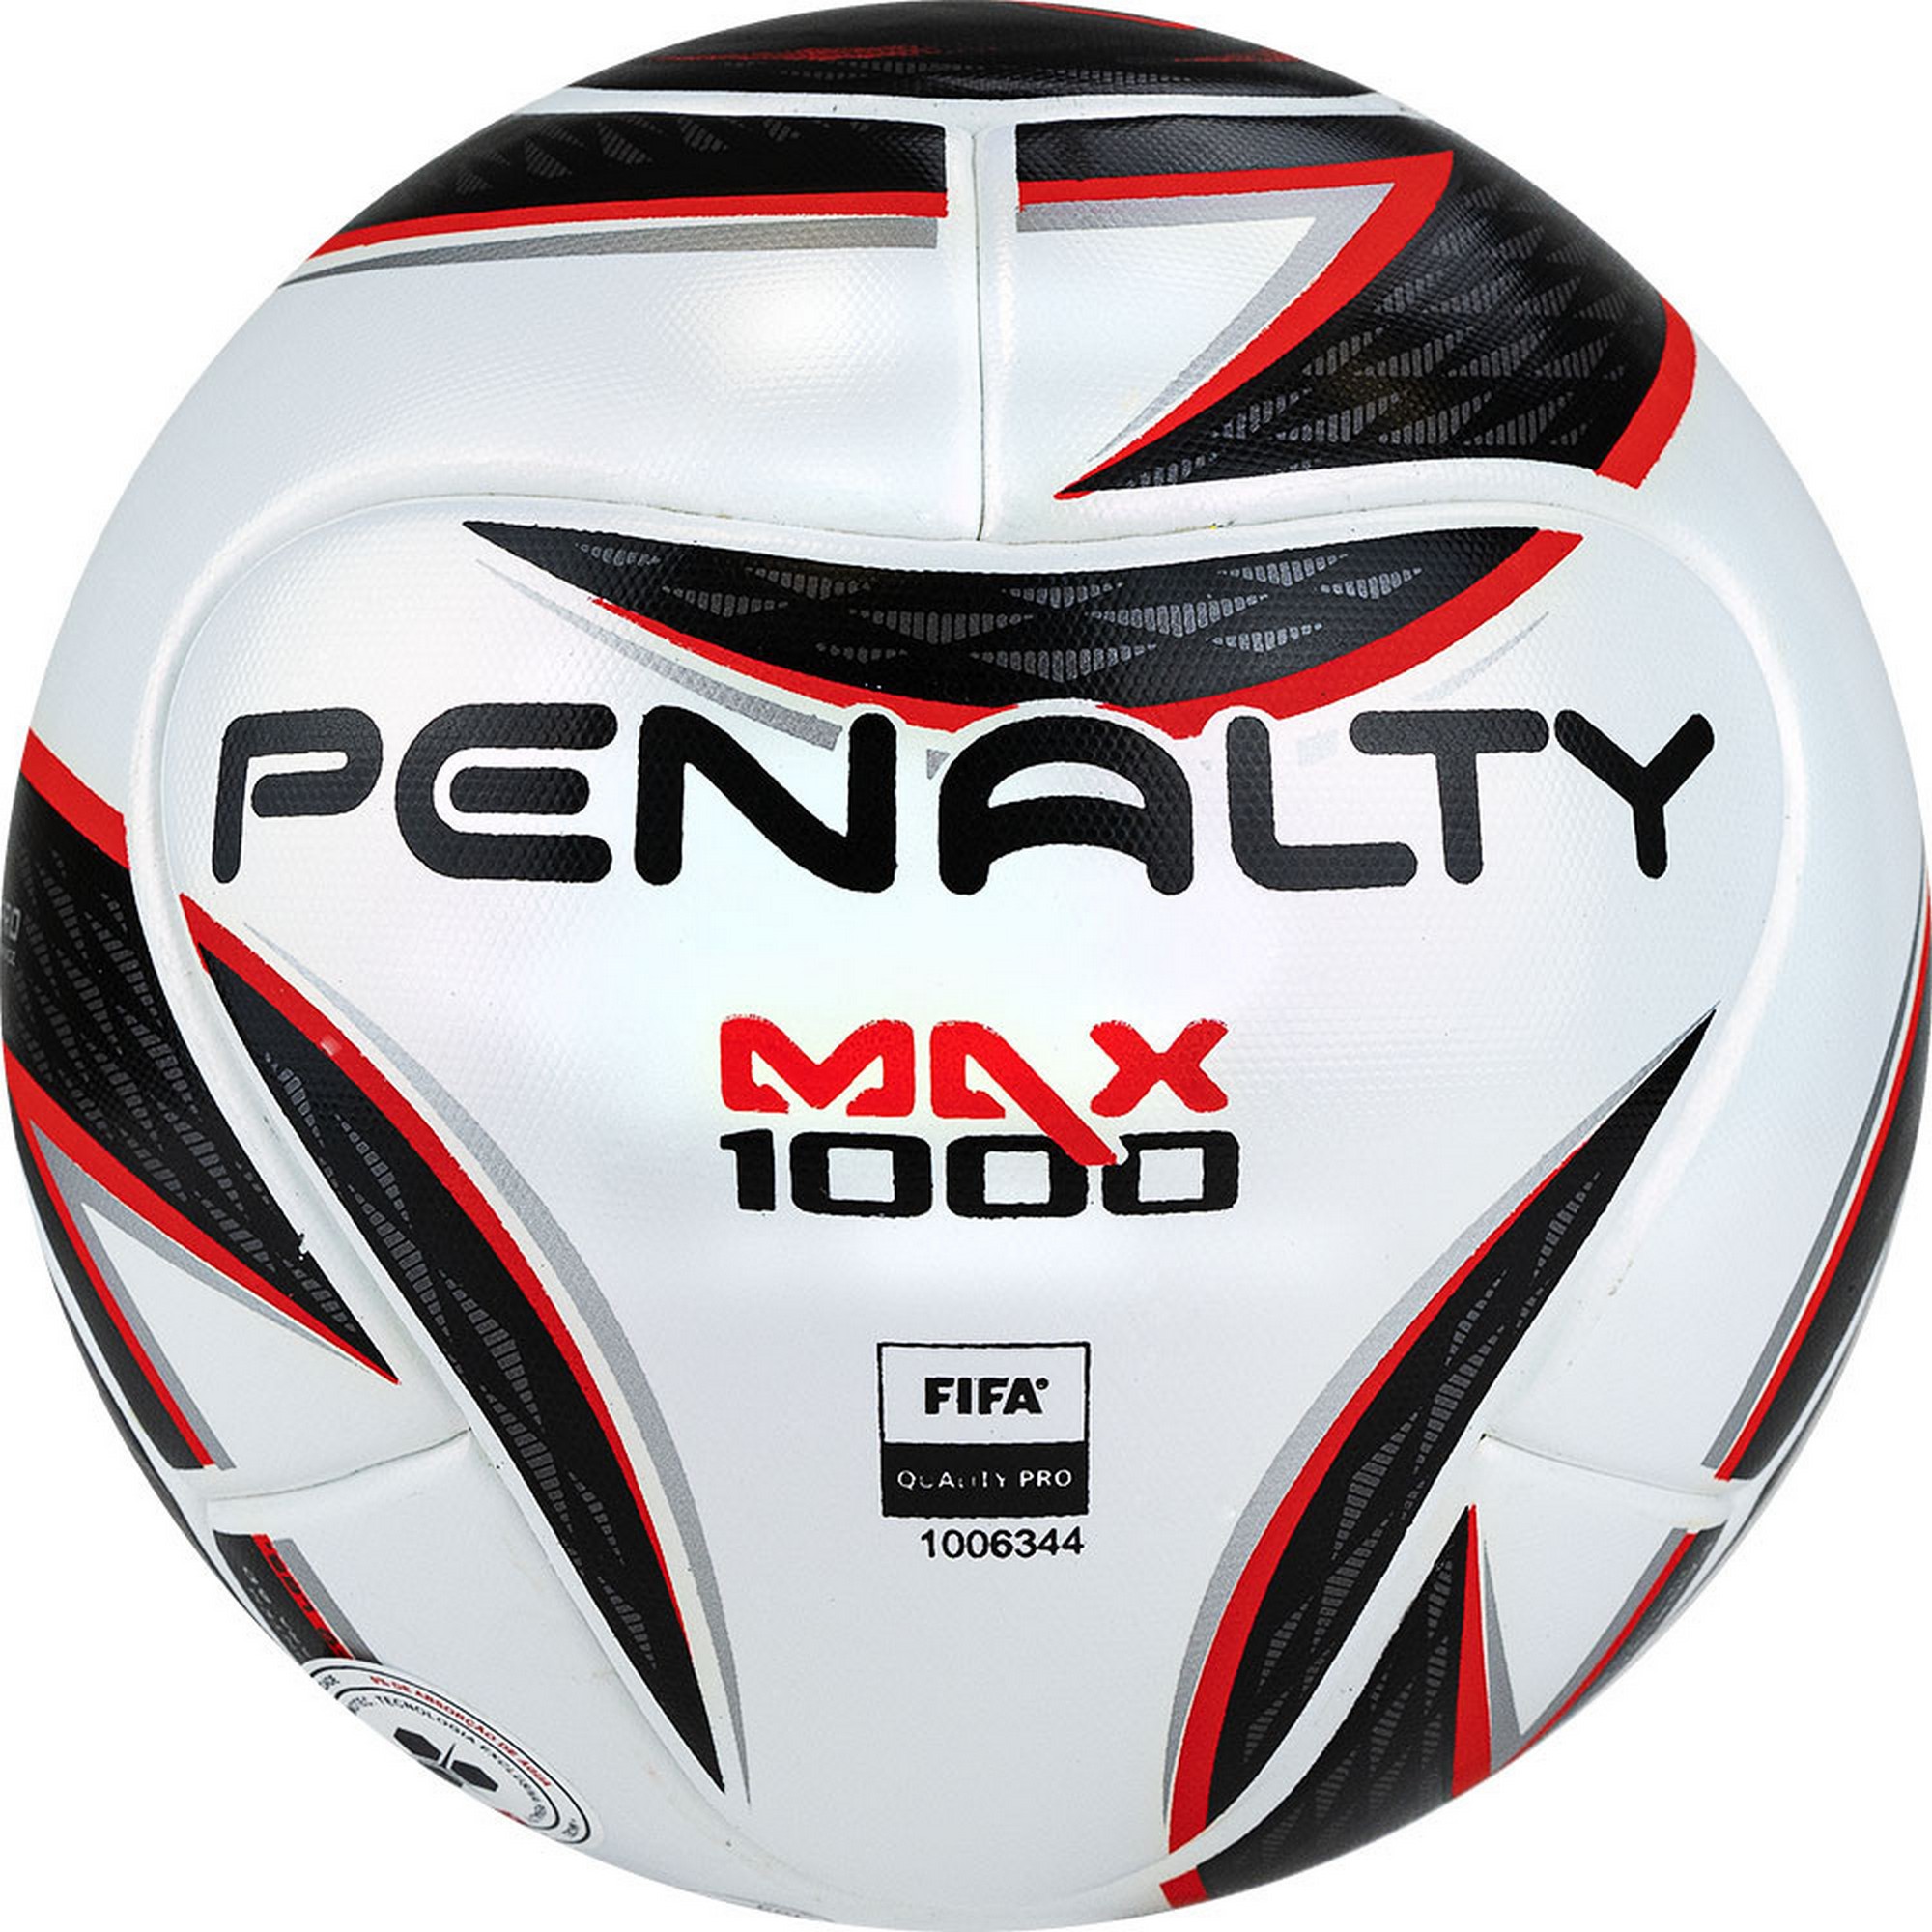   Penalty Futsal Max 1000 XXII 5416271160-U .4